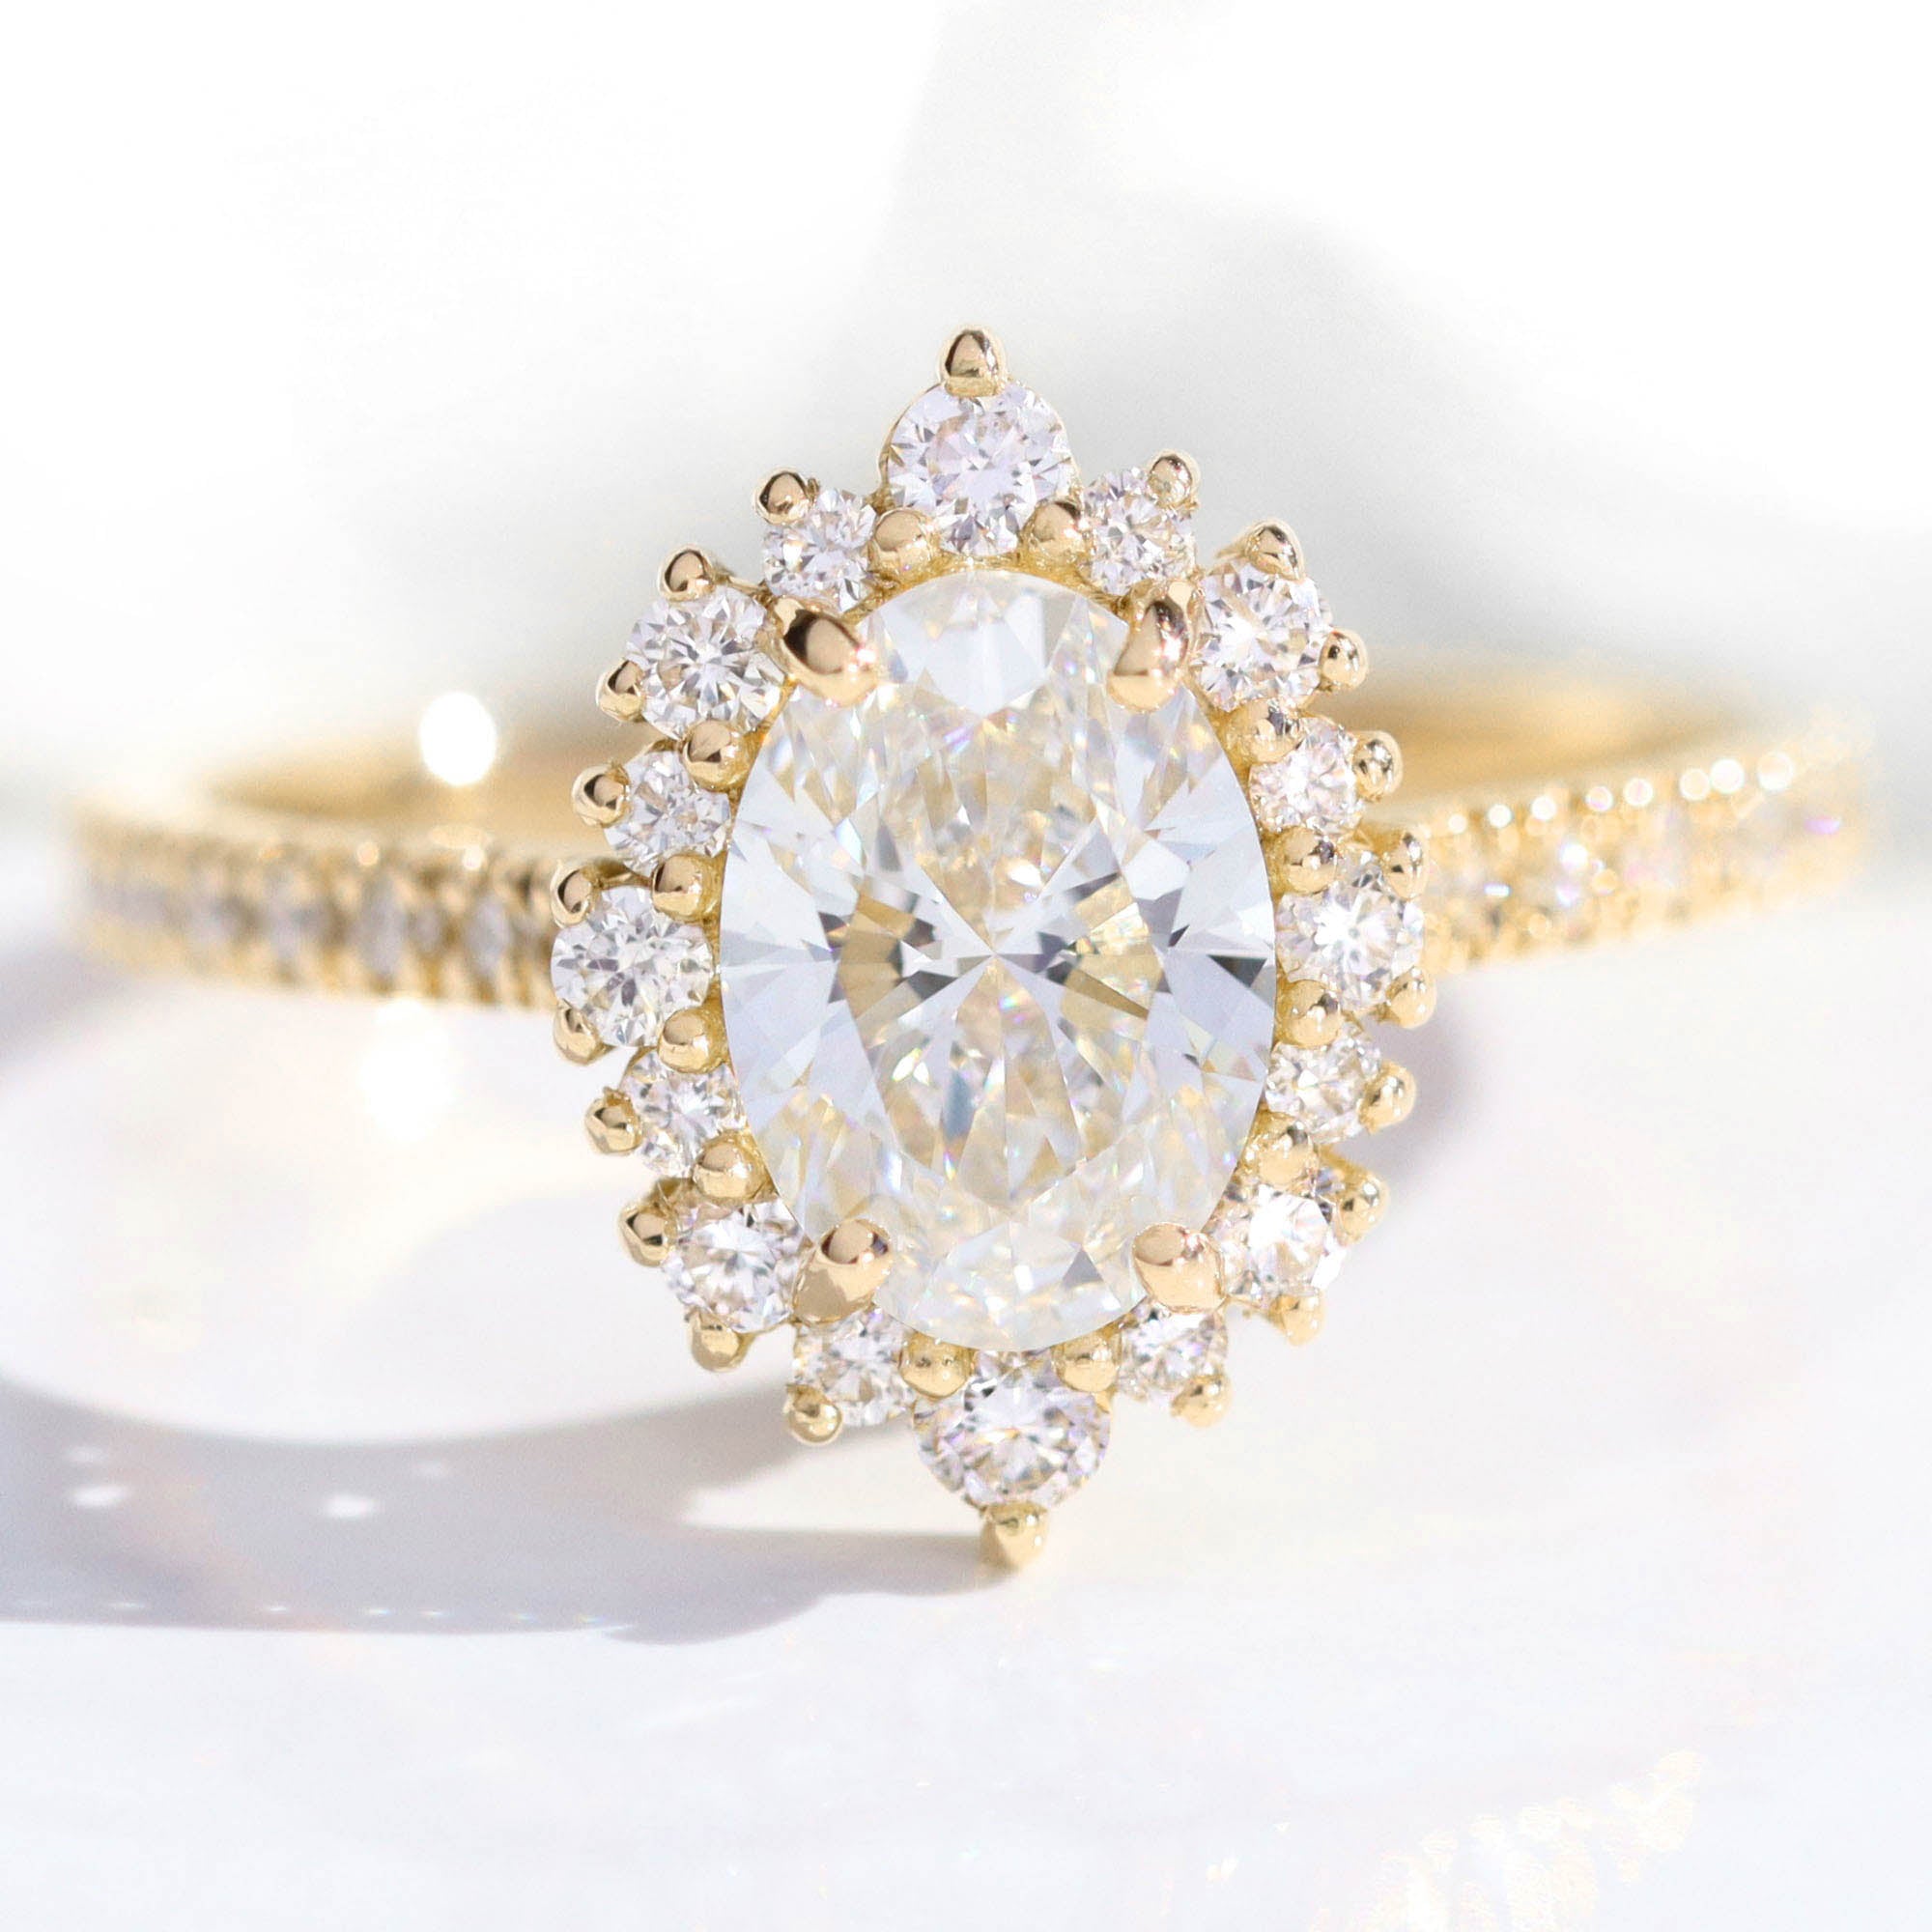 lab diamond ring yellow gold halo oval diamond engagement ring La More Design Jewelry